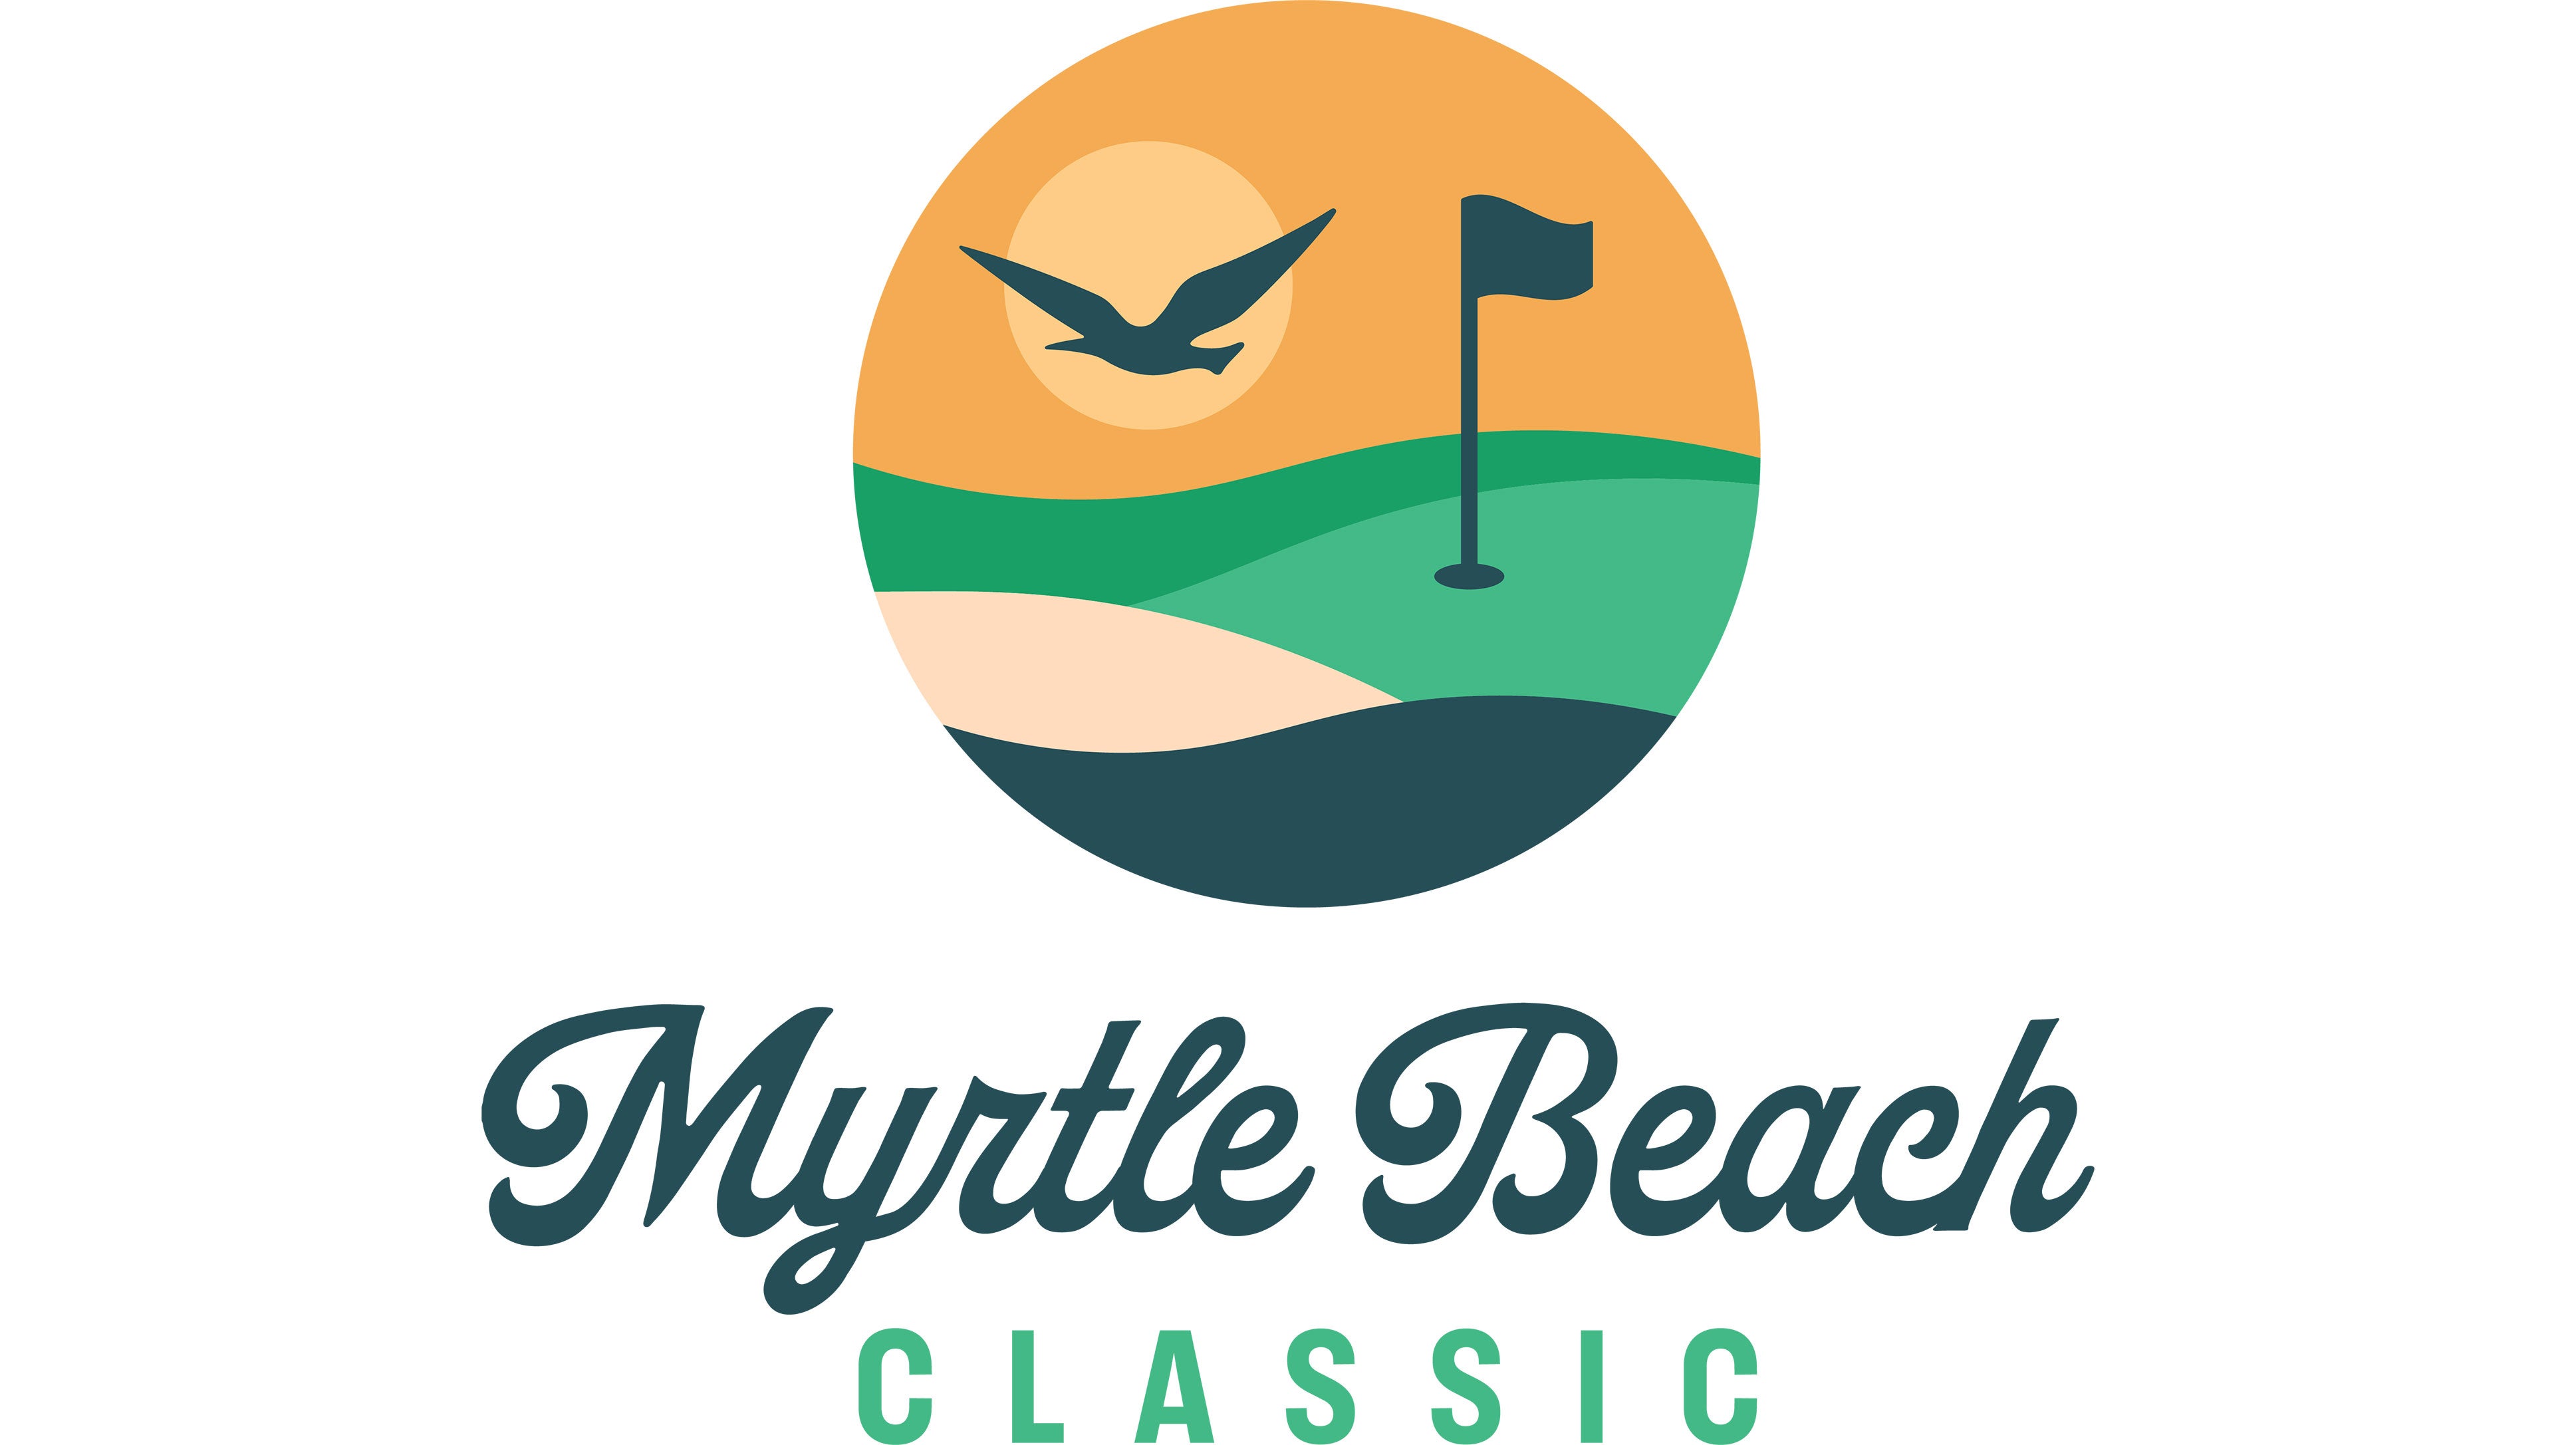 Myrtle Beach Classic - Wednesday